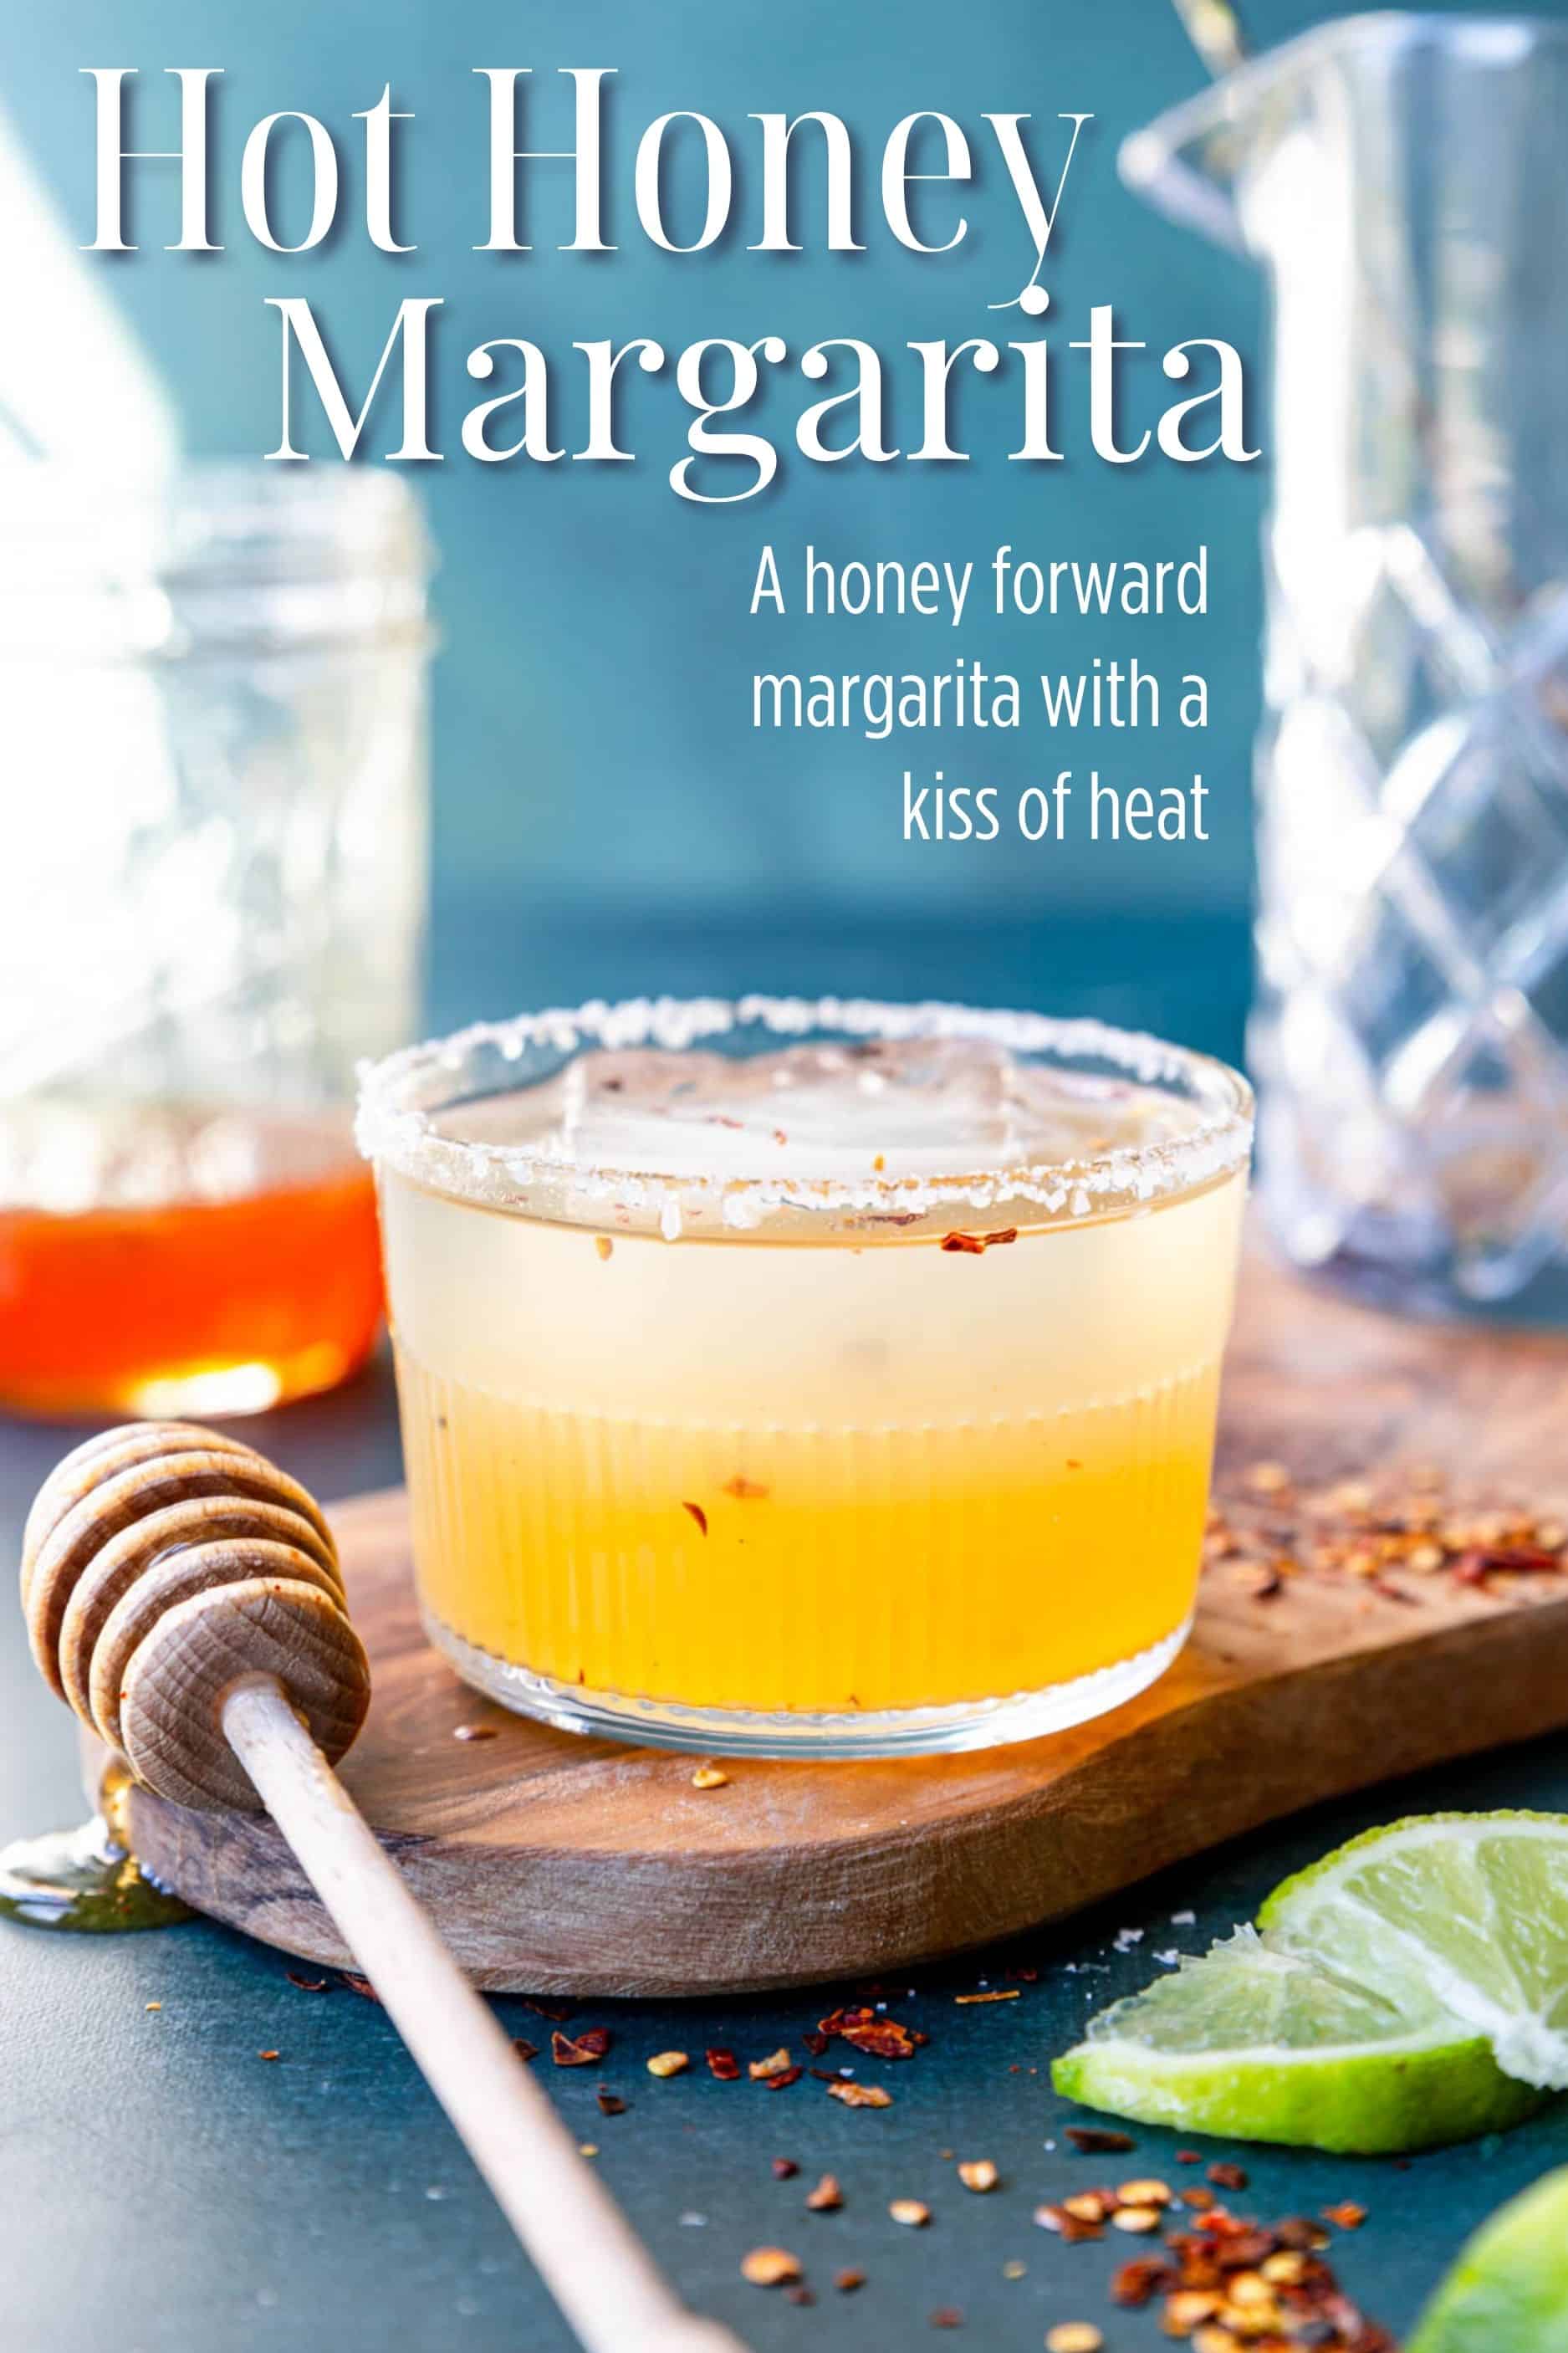 hot honey margarita pin image with text overlay